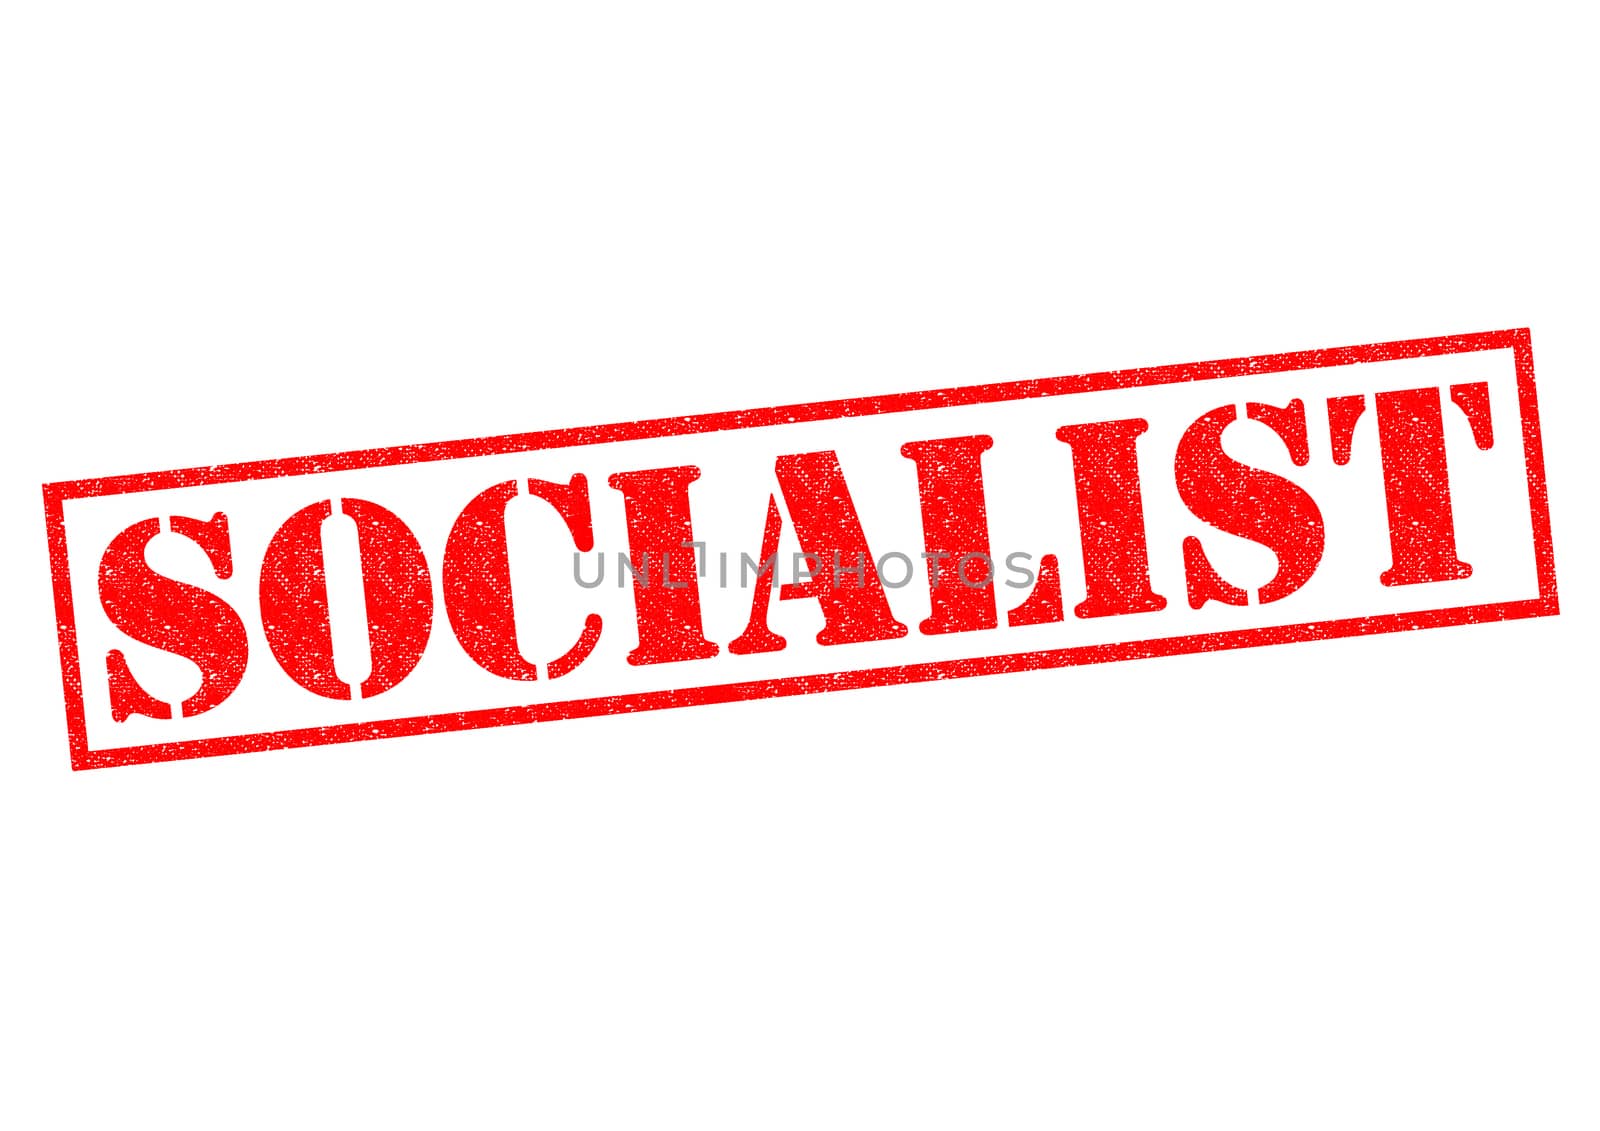 SOCIALIST by chrisdorney